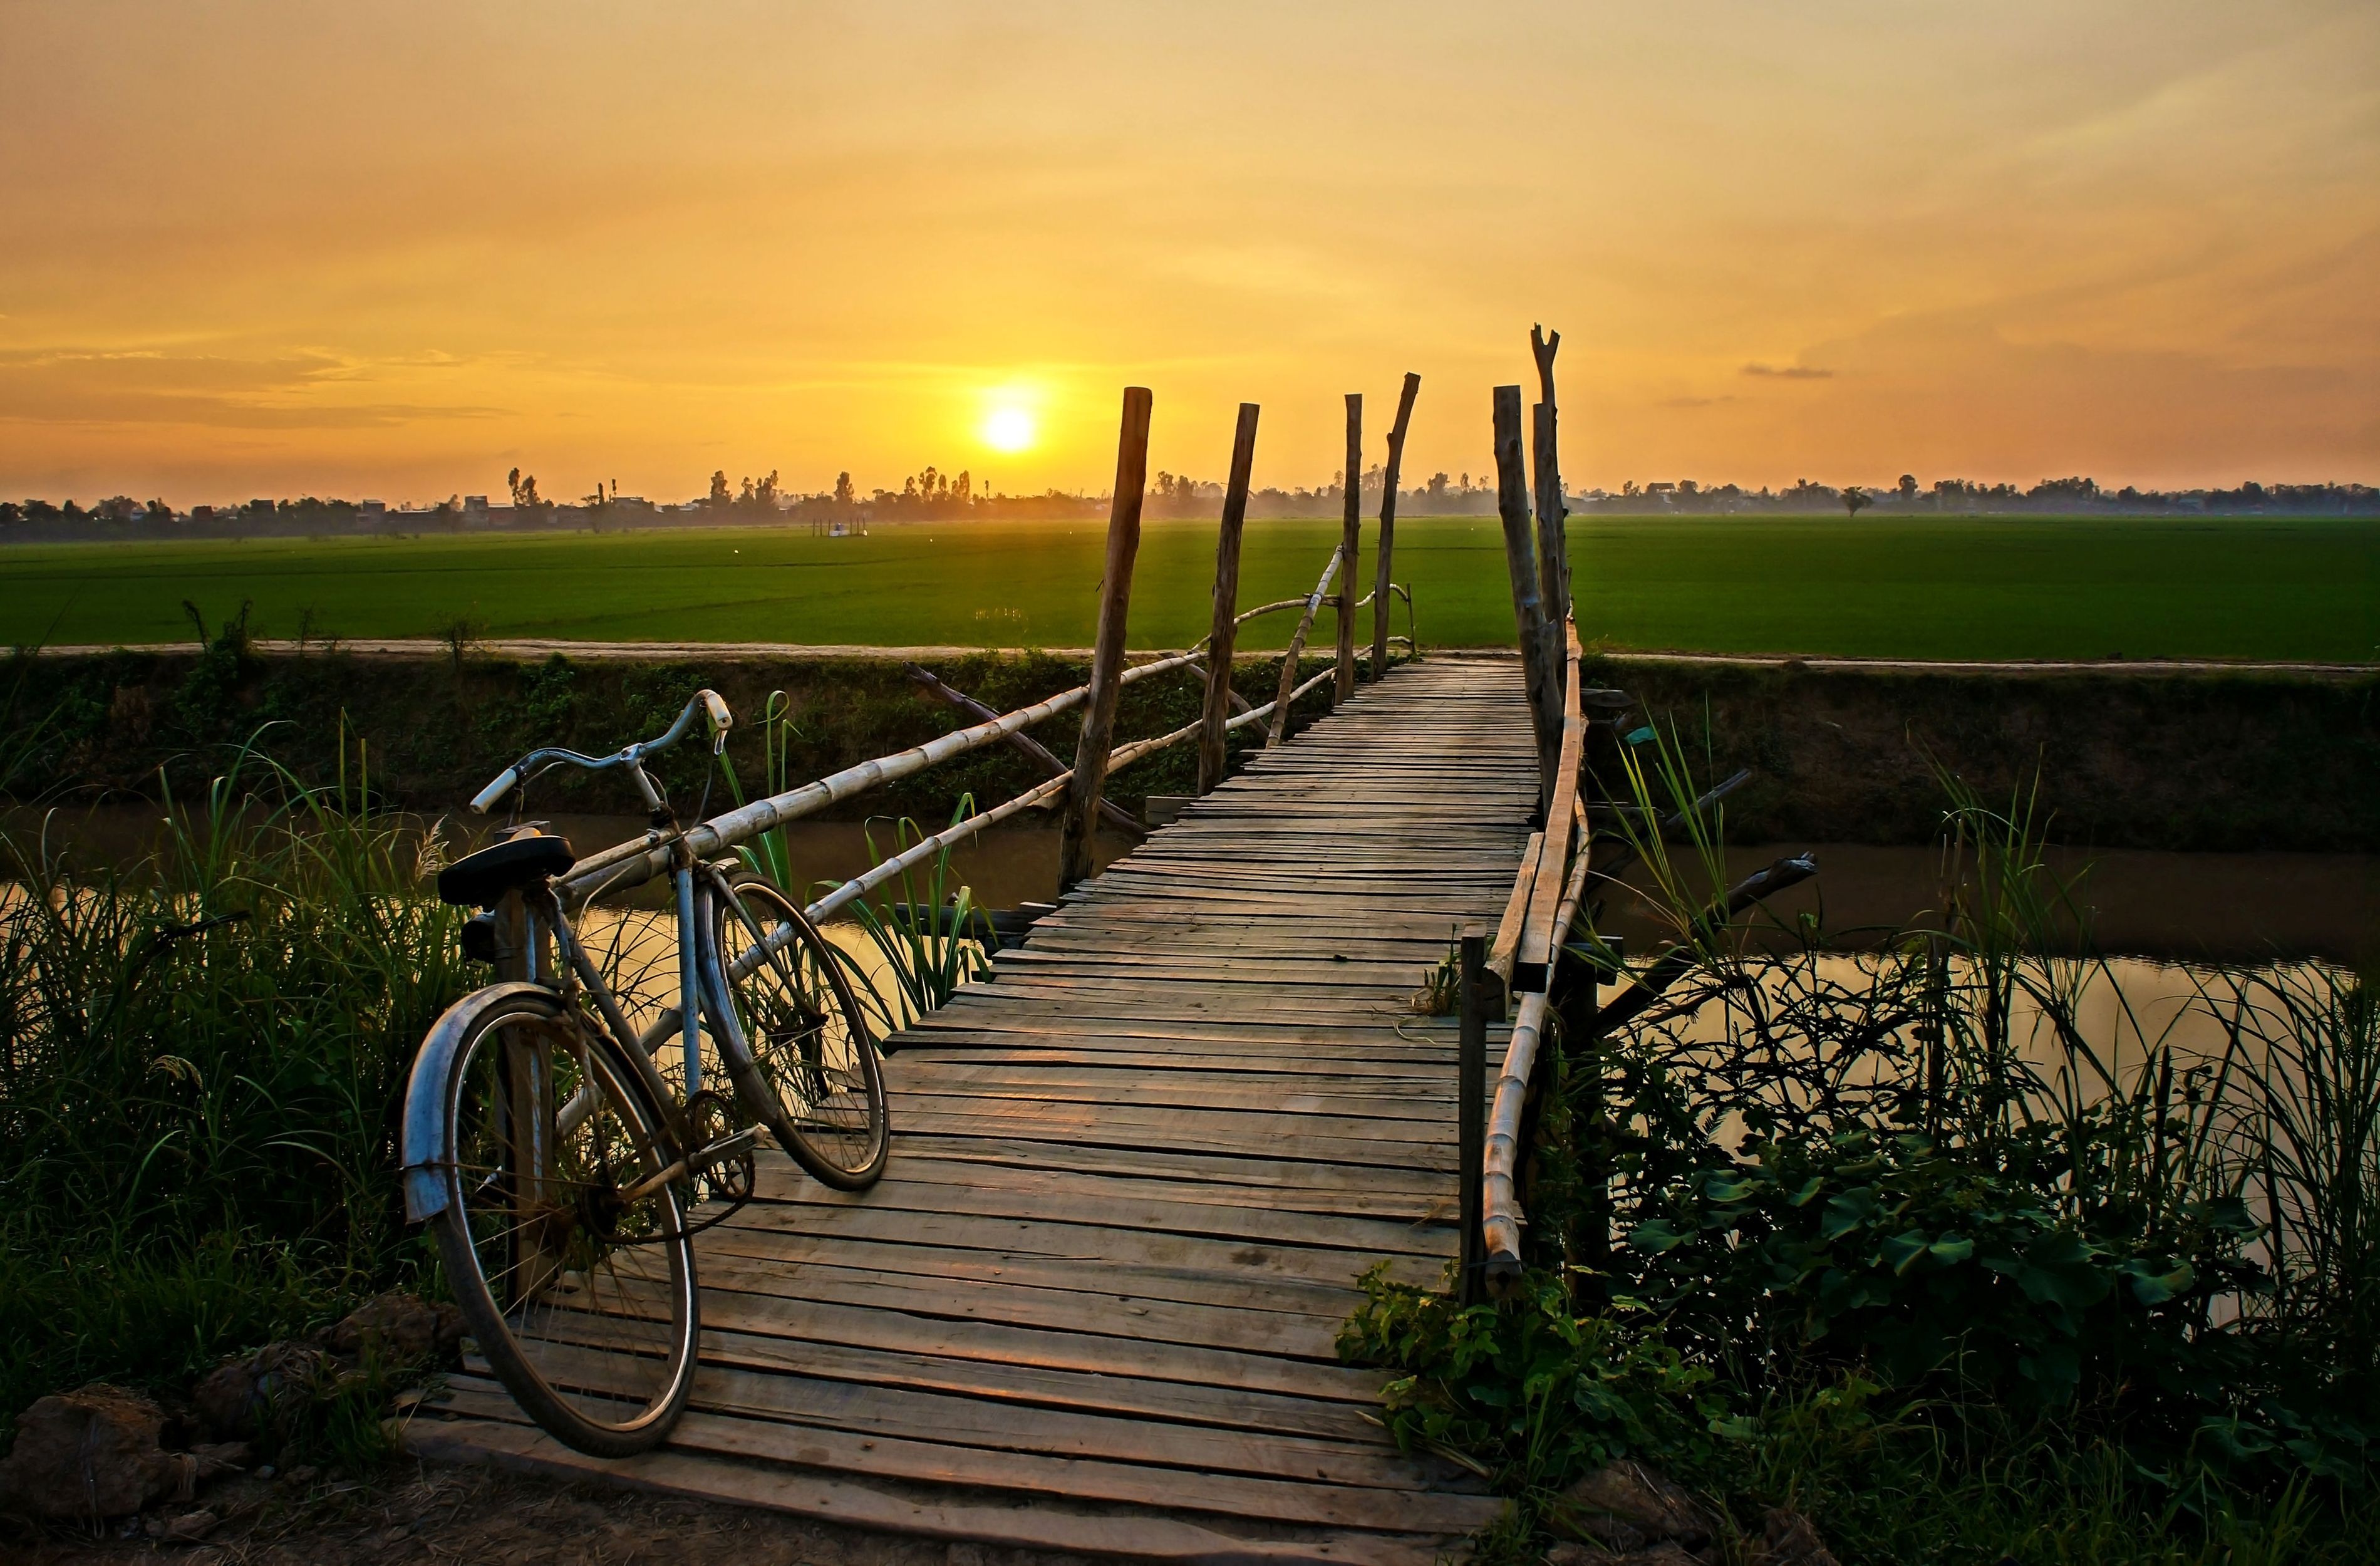 Велосипед для деревни. Велосипед на природе. Пейзаж с мостиком. Пейзаж с мостом. Пейзаж с велосипедом.